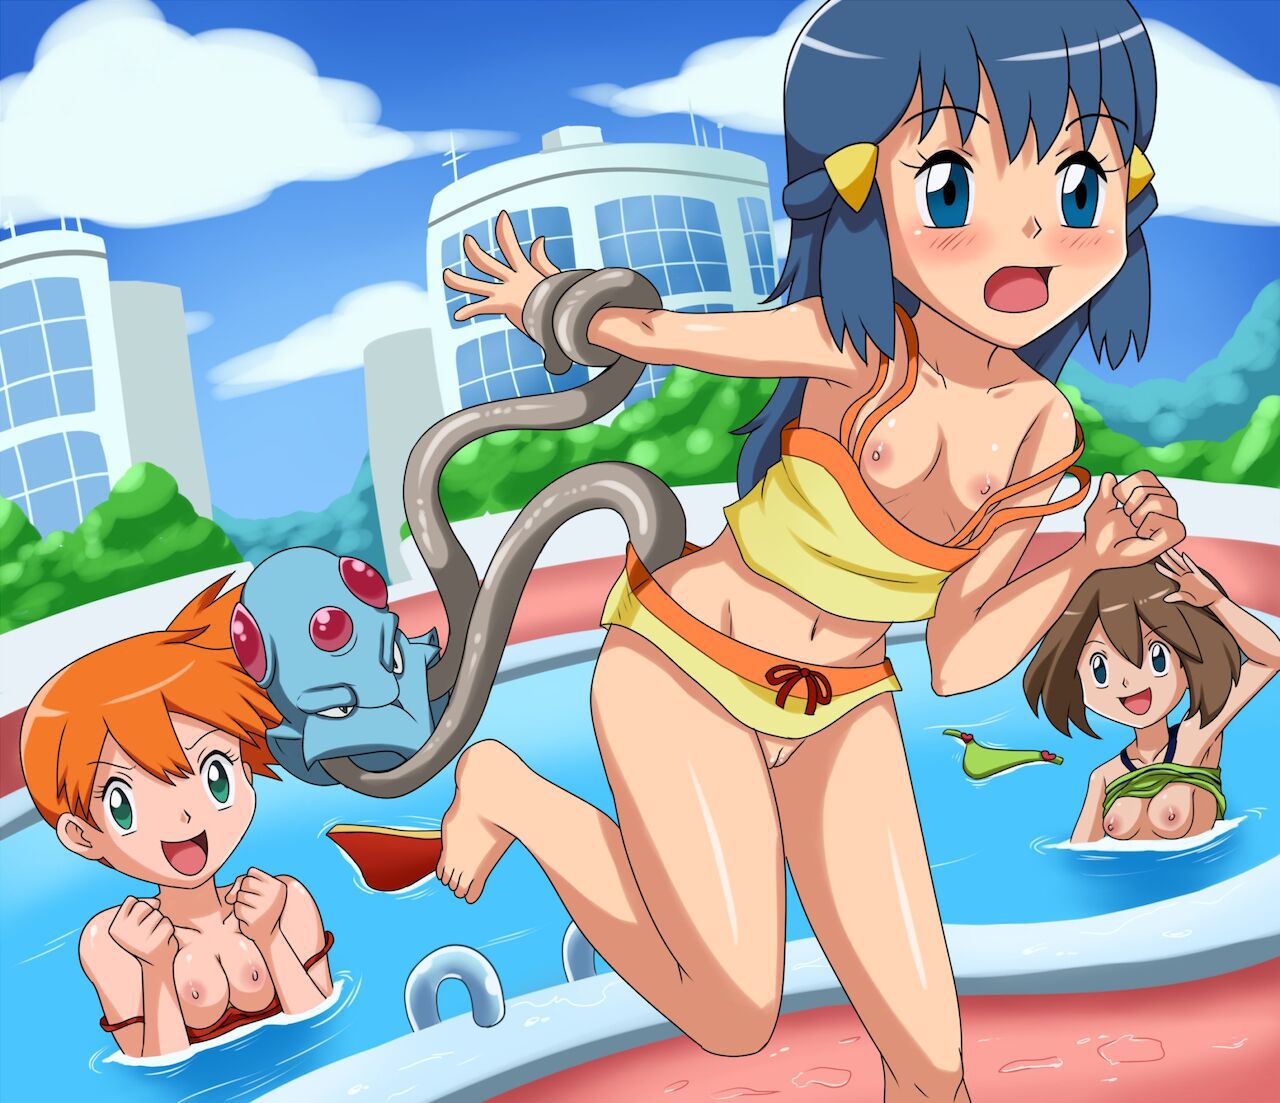 Anime girls in bikinis 85